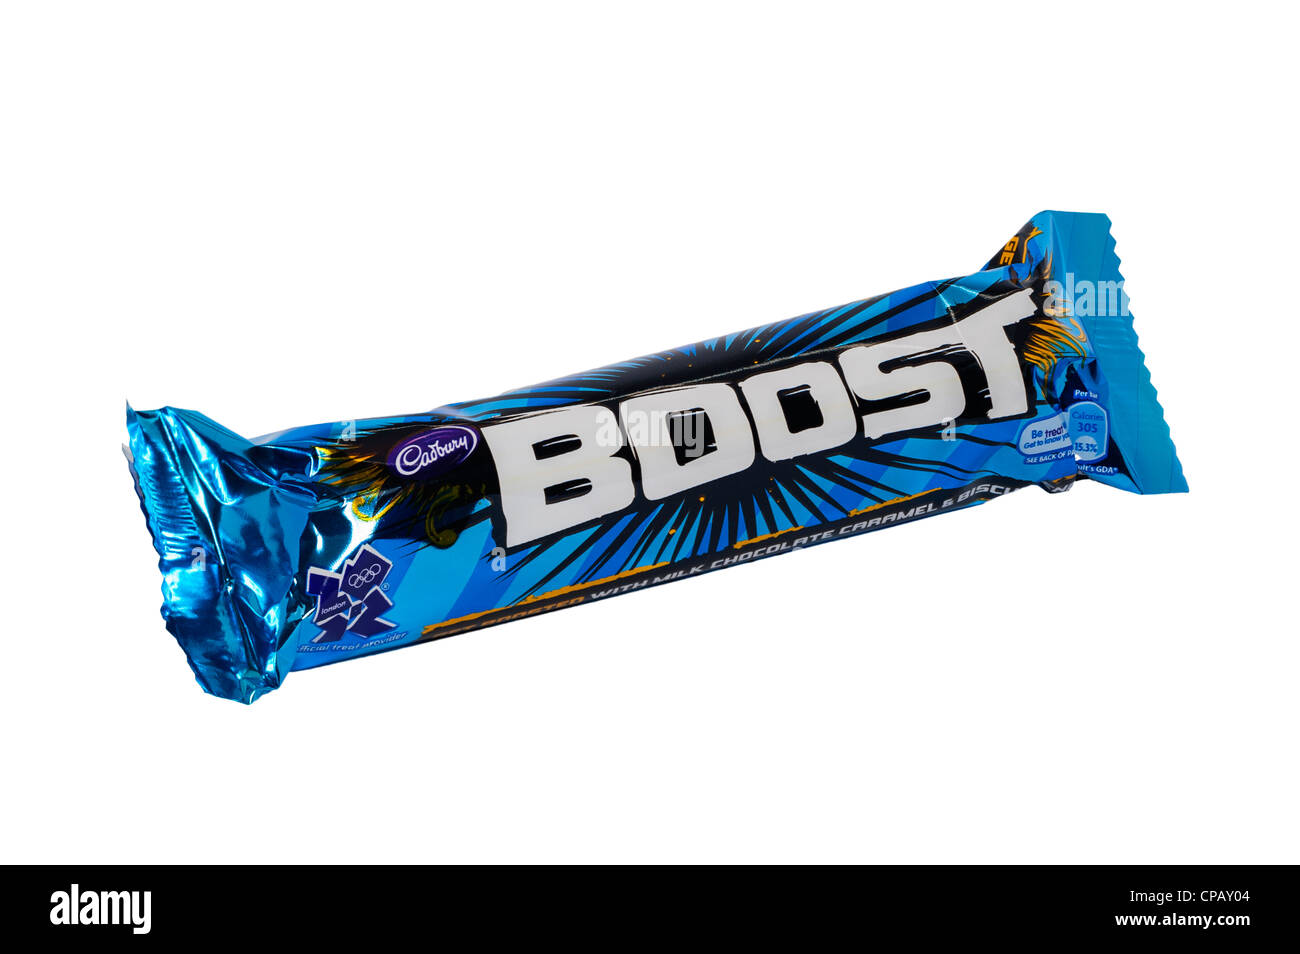 A Cadbury Boost chocolate bar on a white background Stock Photo